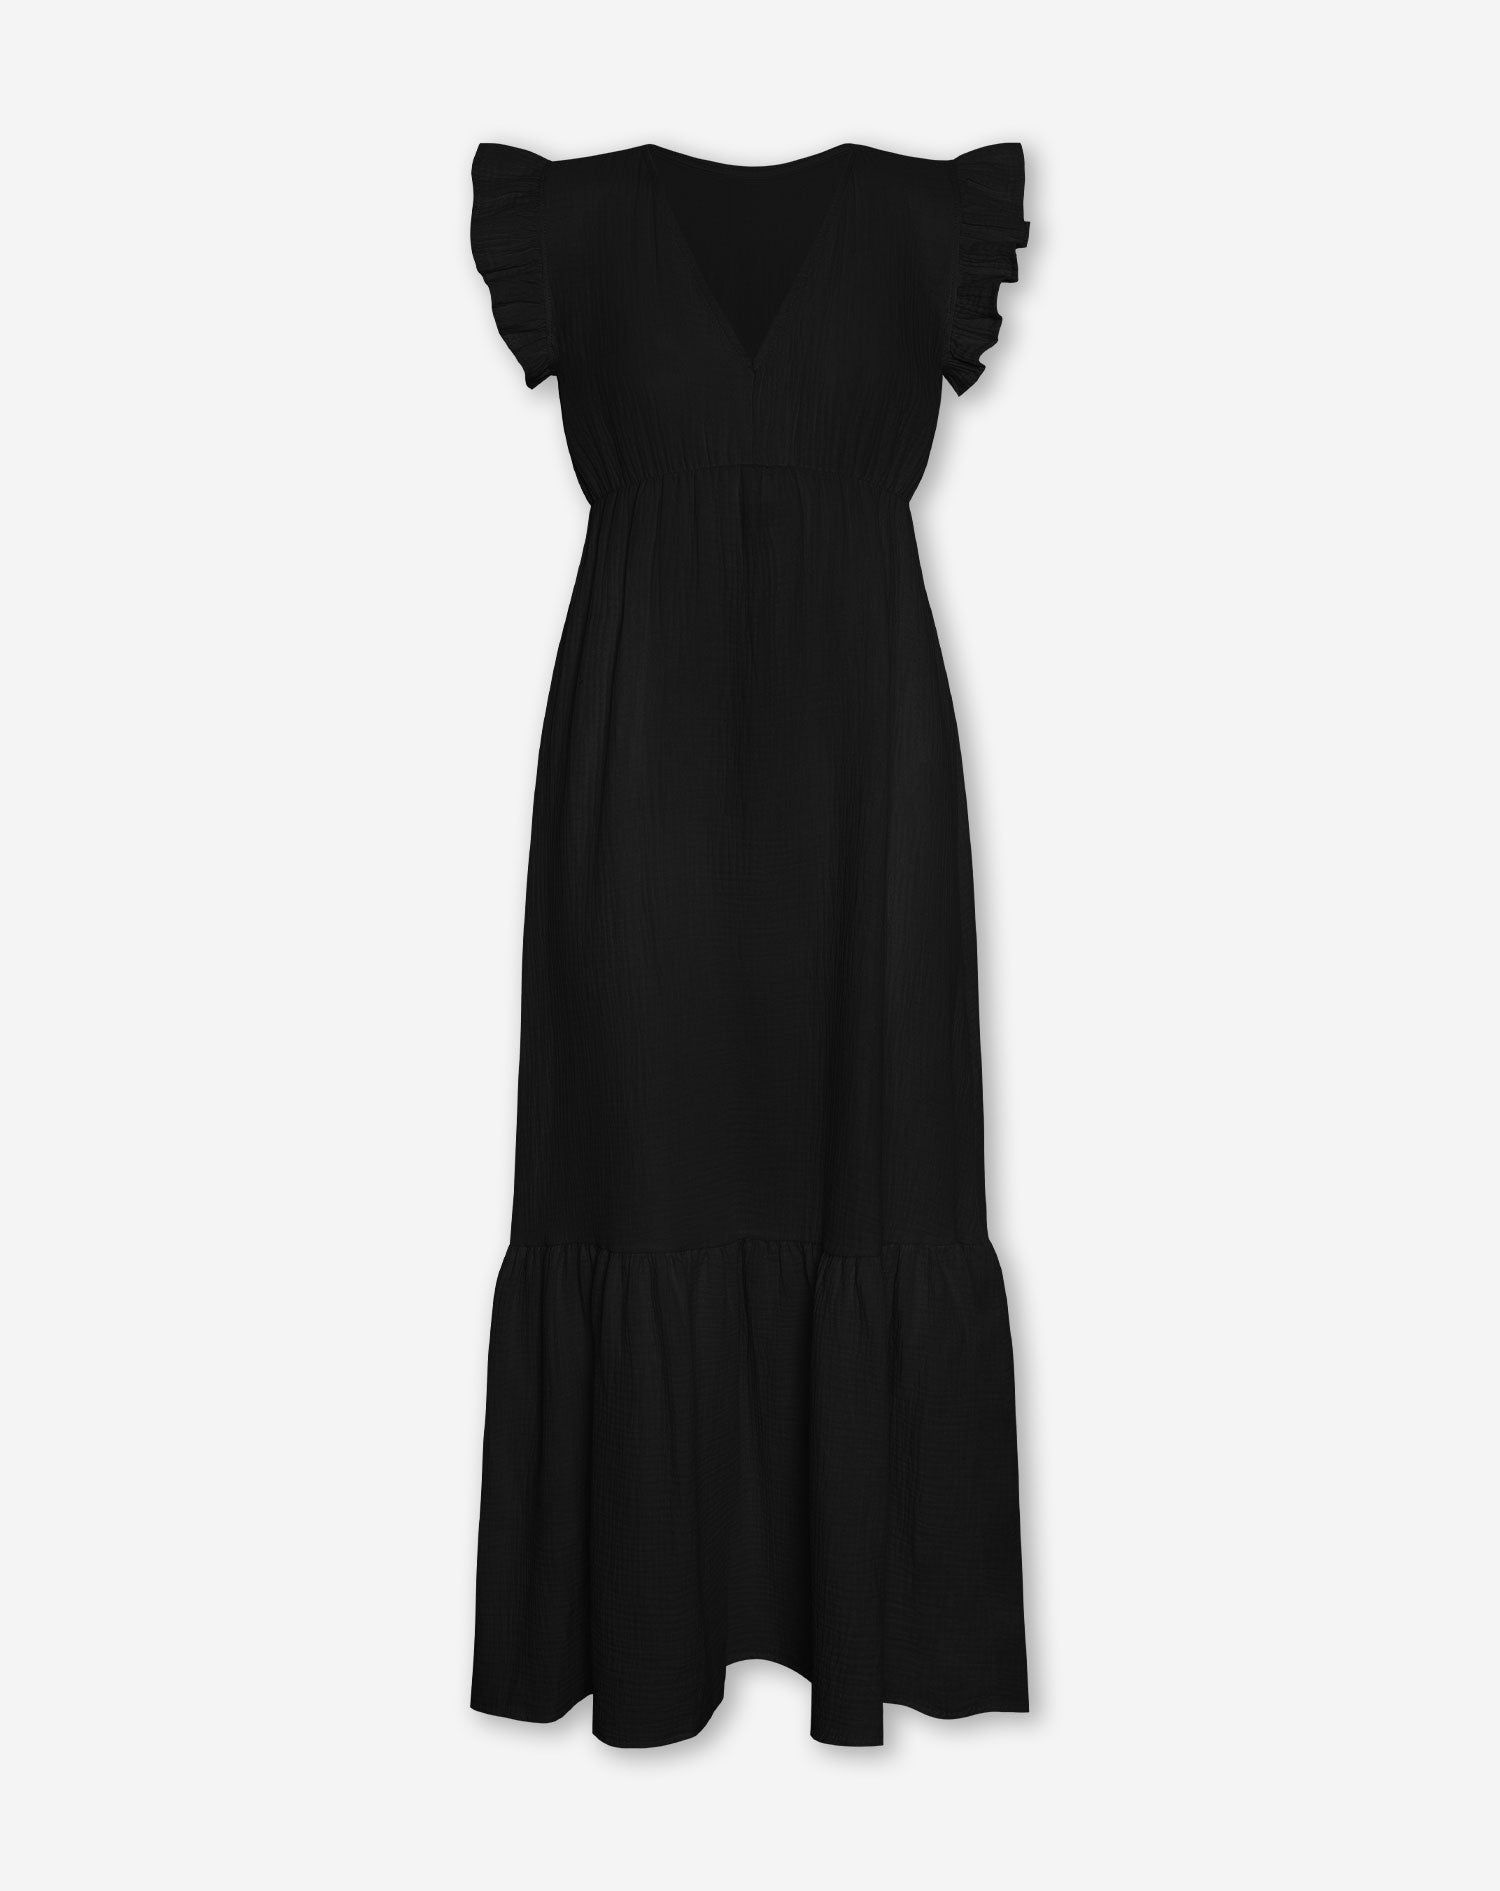 MALANI MUSSELINE MAXI DRESS BLACK